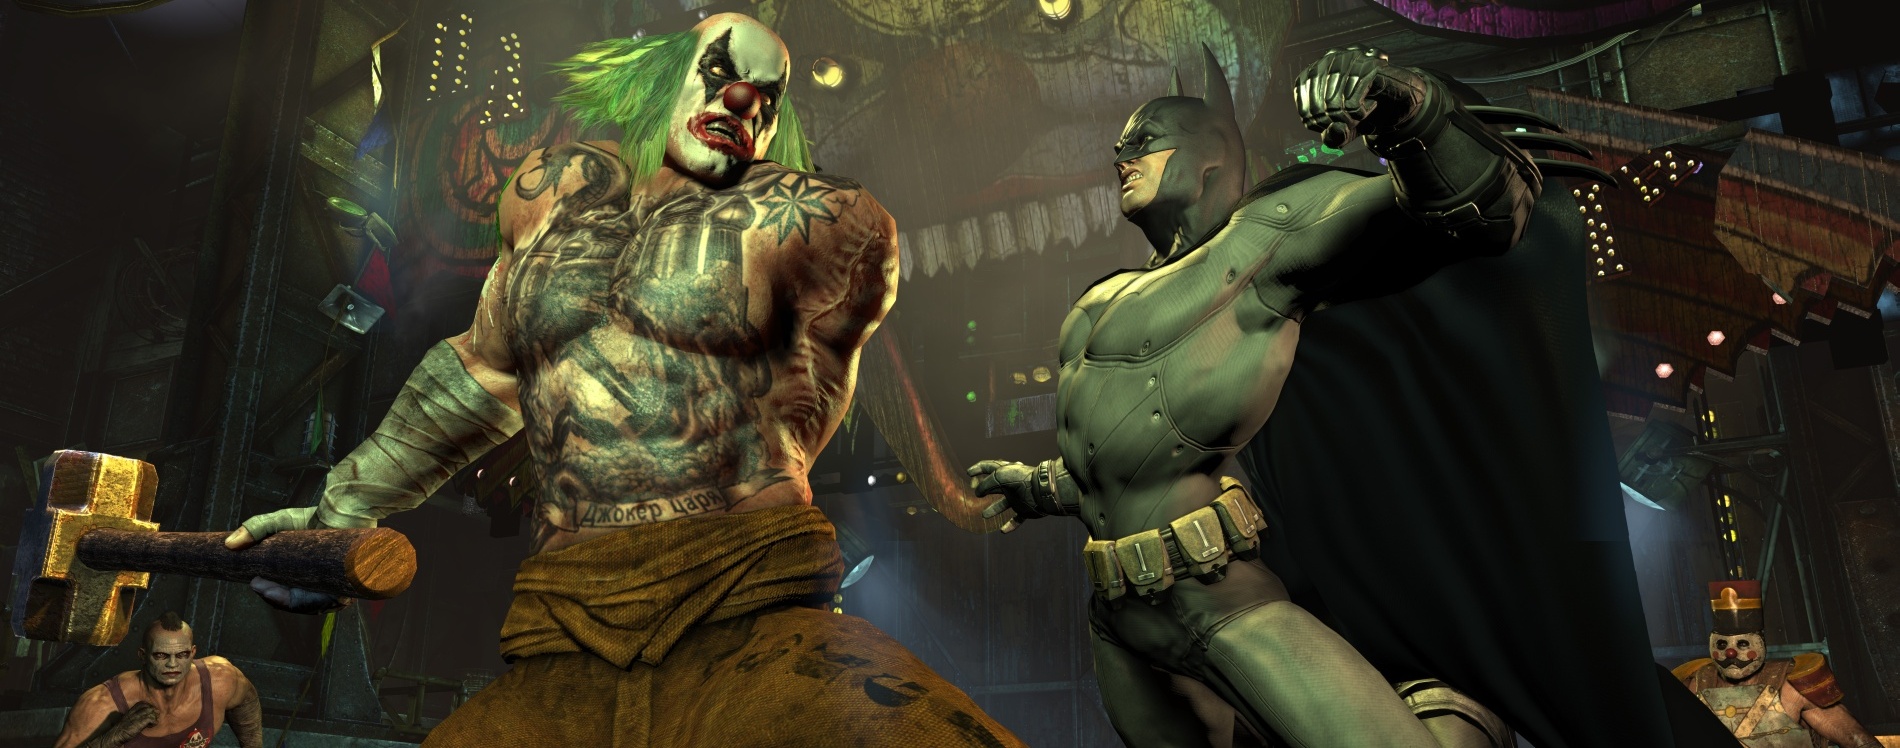 Batman: Arkham City demo available now through OnLive | PC Gamer